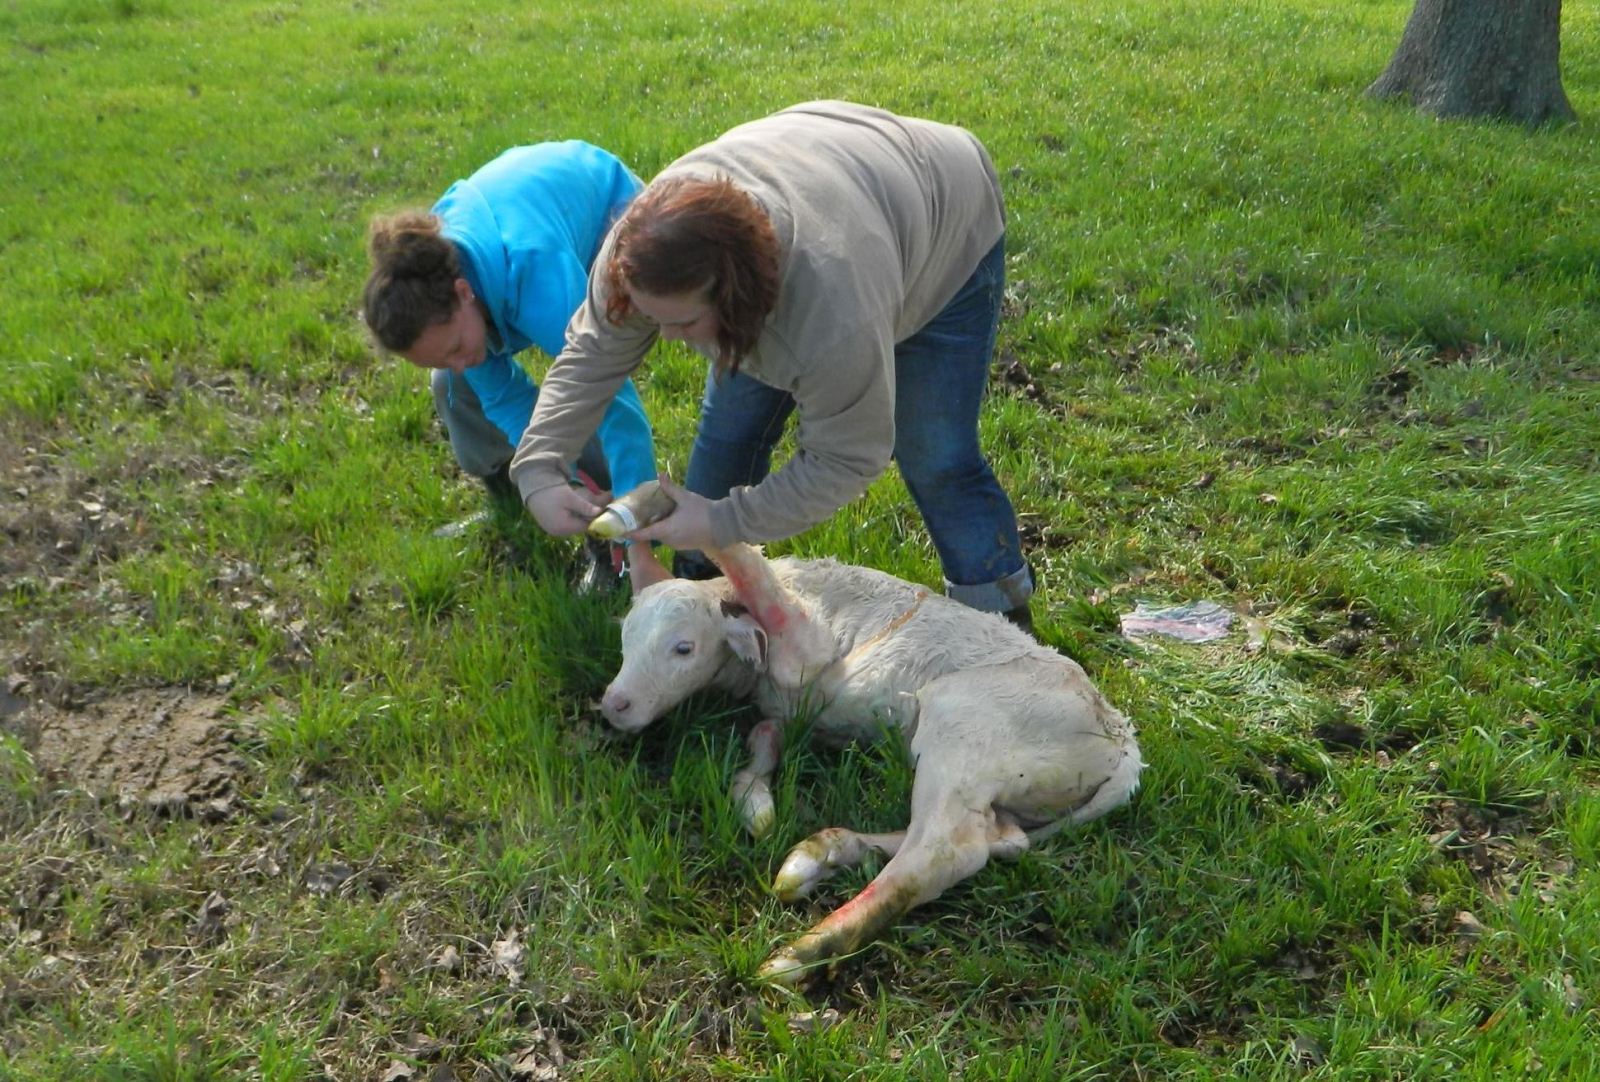 Tagging a new calf